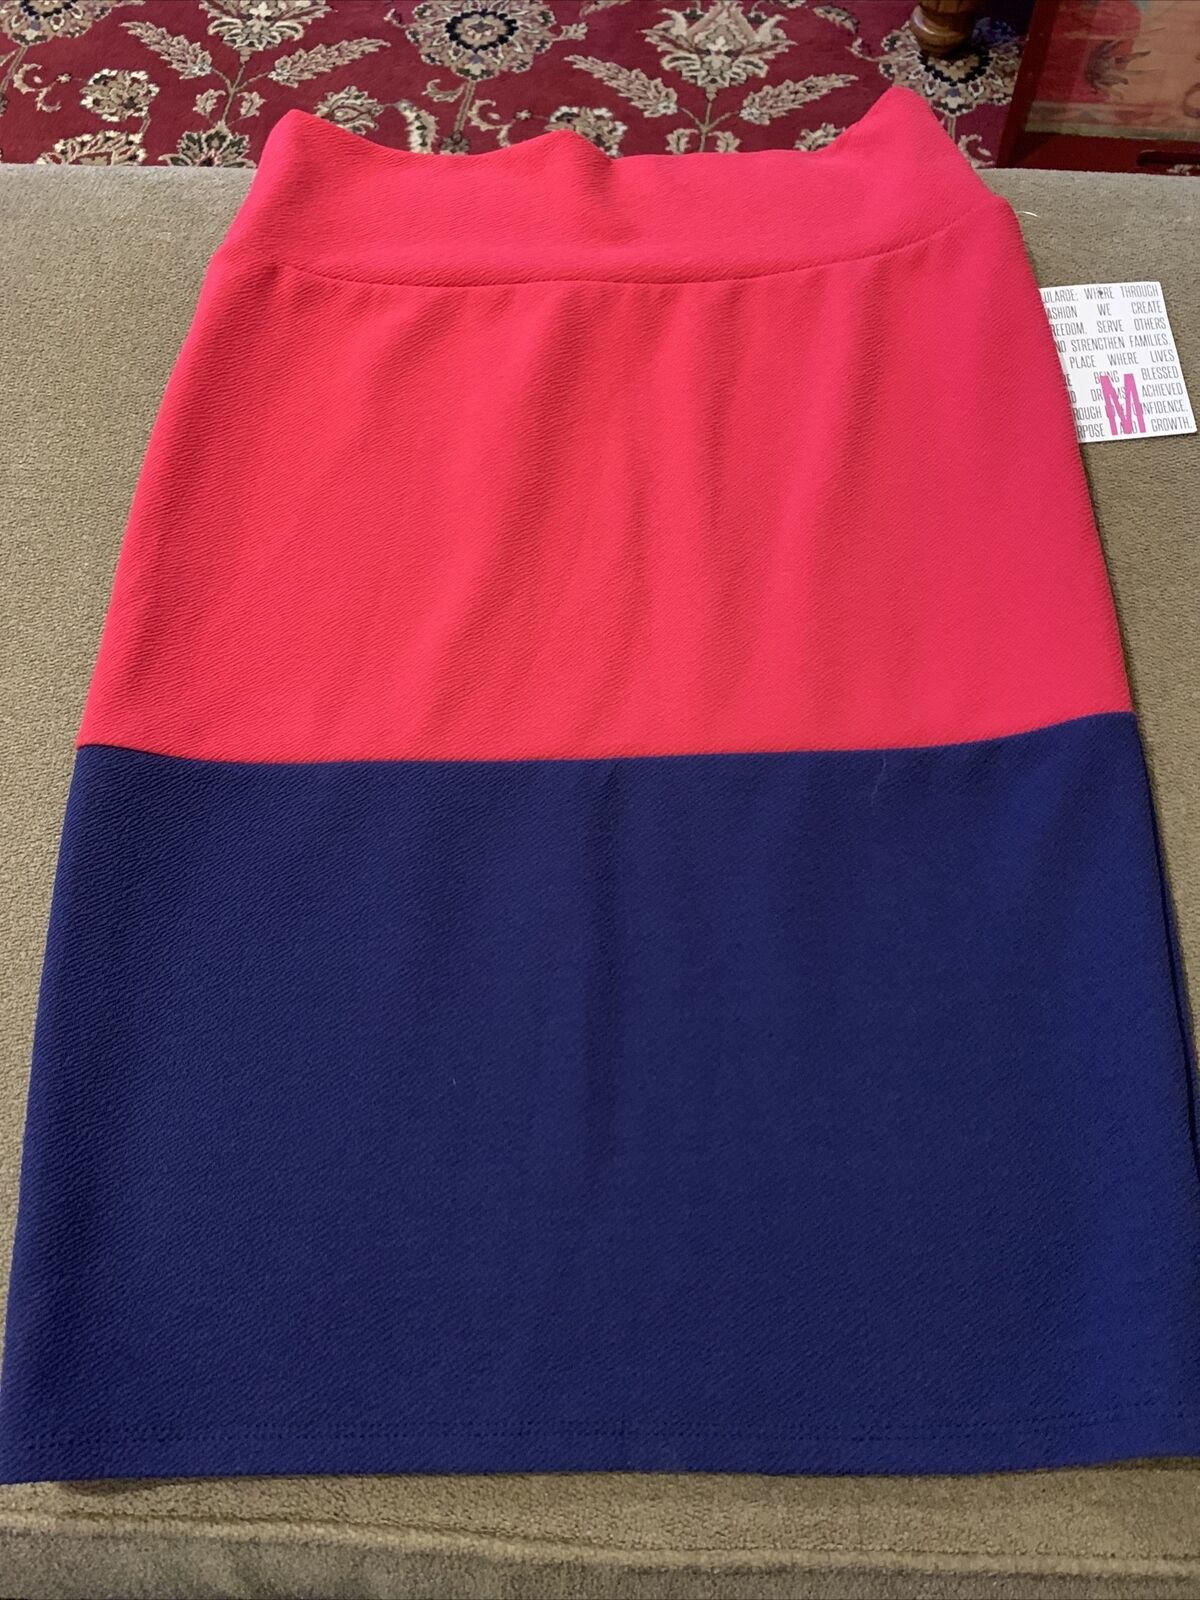 Lularoe Cassie Pencil Skirt Size Medium Women’s Red & Blue Striped (LE)